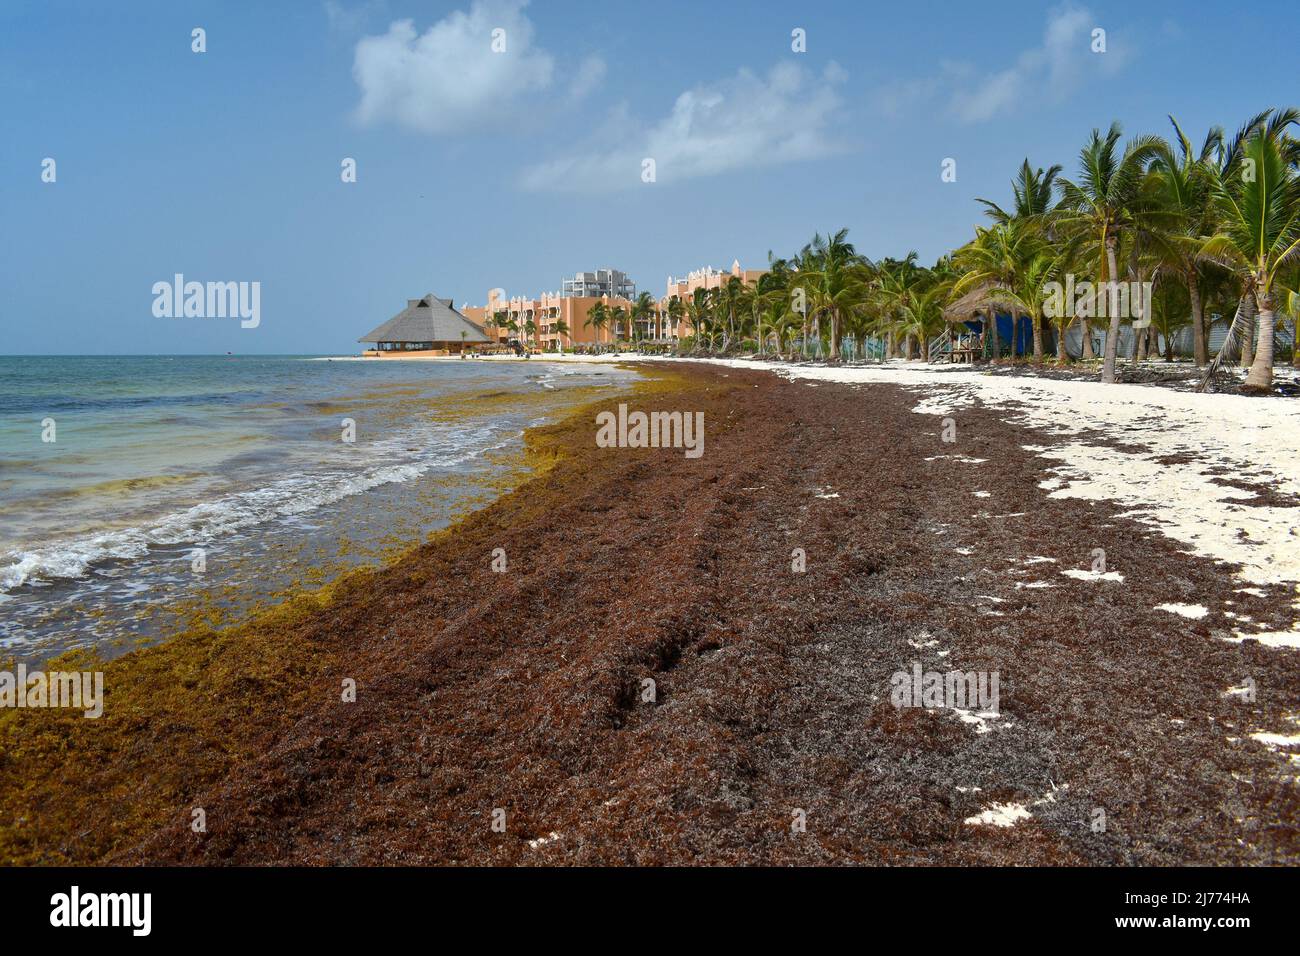 Algen werden an einem Sandstrand, Playa del Carmen, Yucatán, Mexiko, gespült. Stockfoto